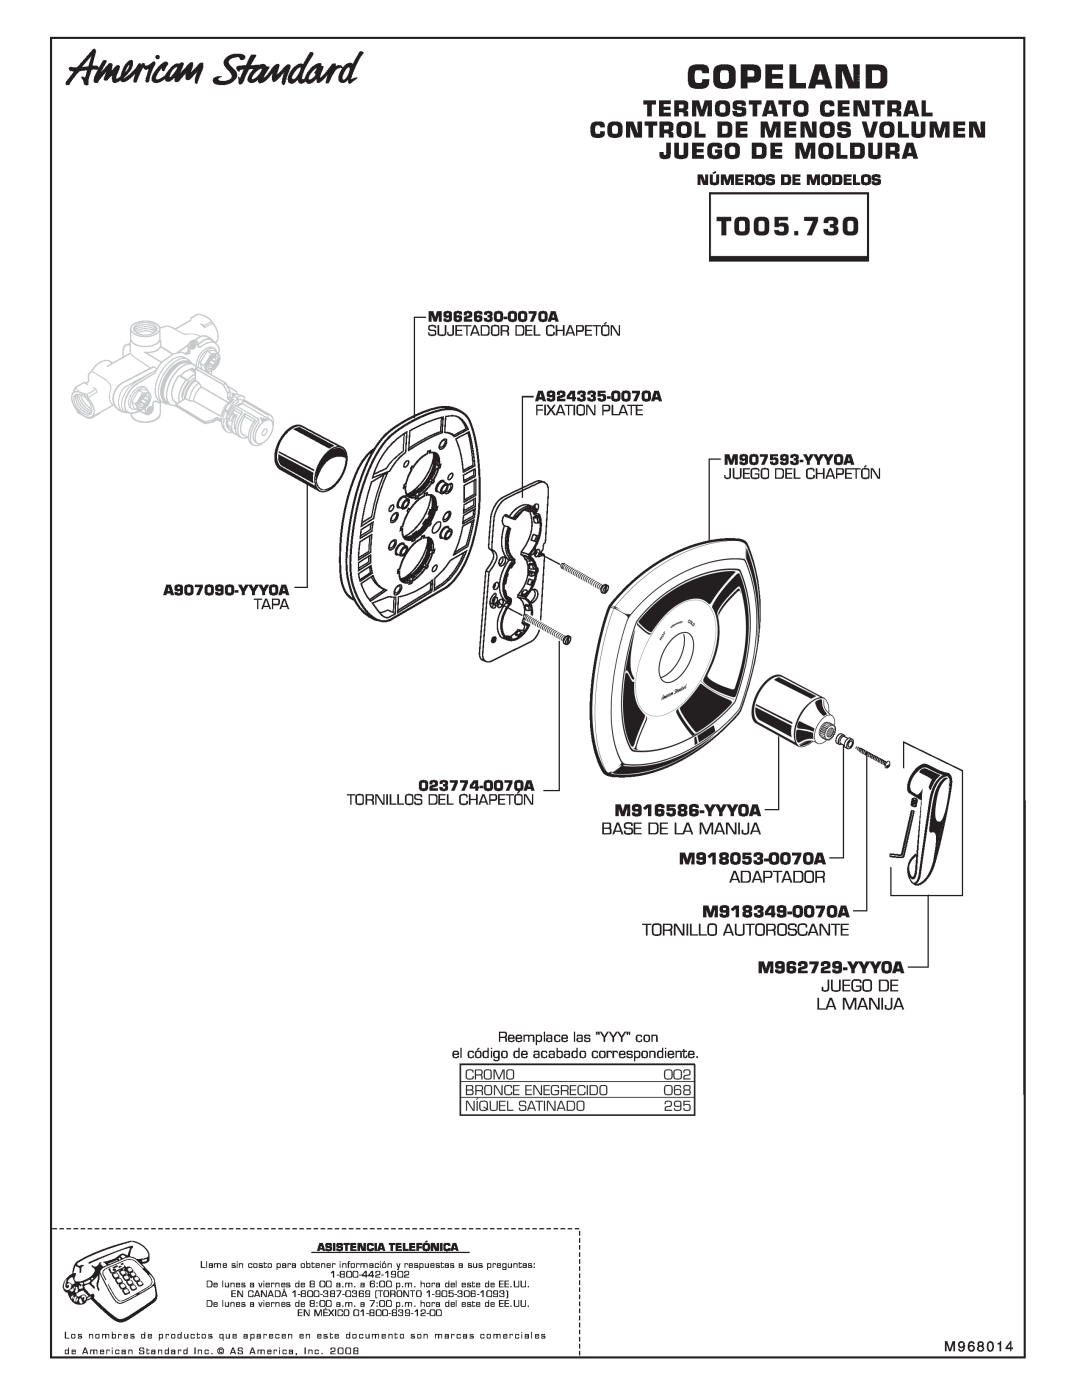 American Standard T005.730 Termostato Central Control De Menos Volumen Juego De Moldura, Copeland, M916586-YYY0A, Cromo 